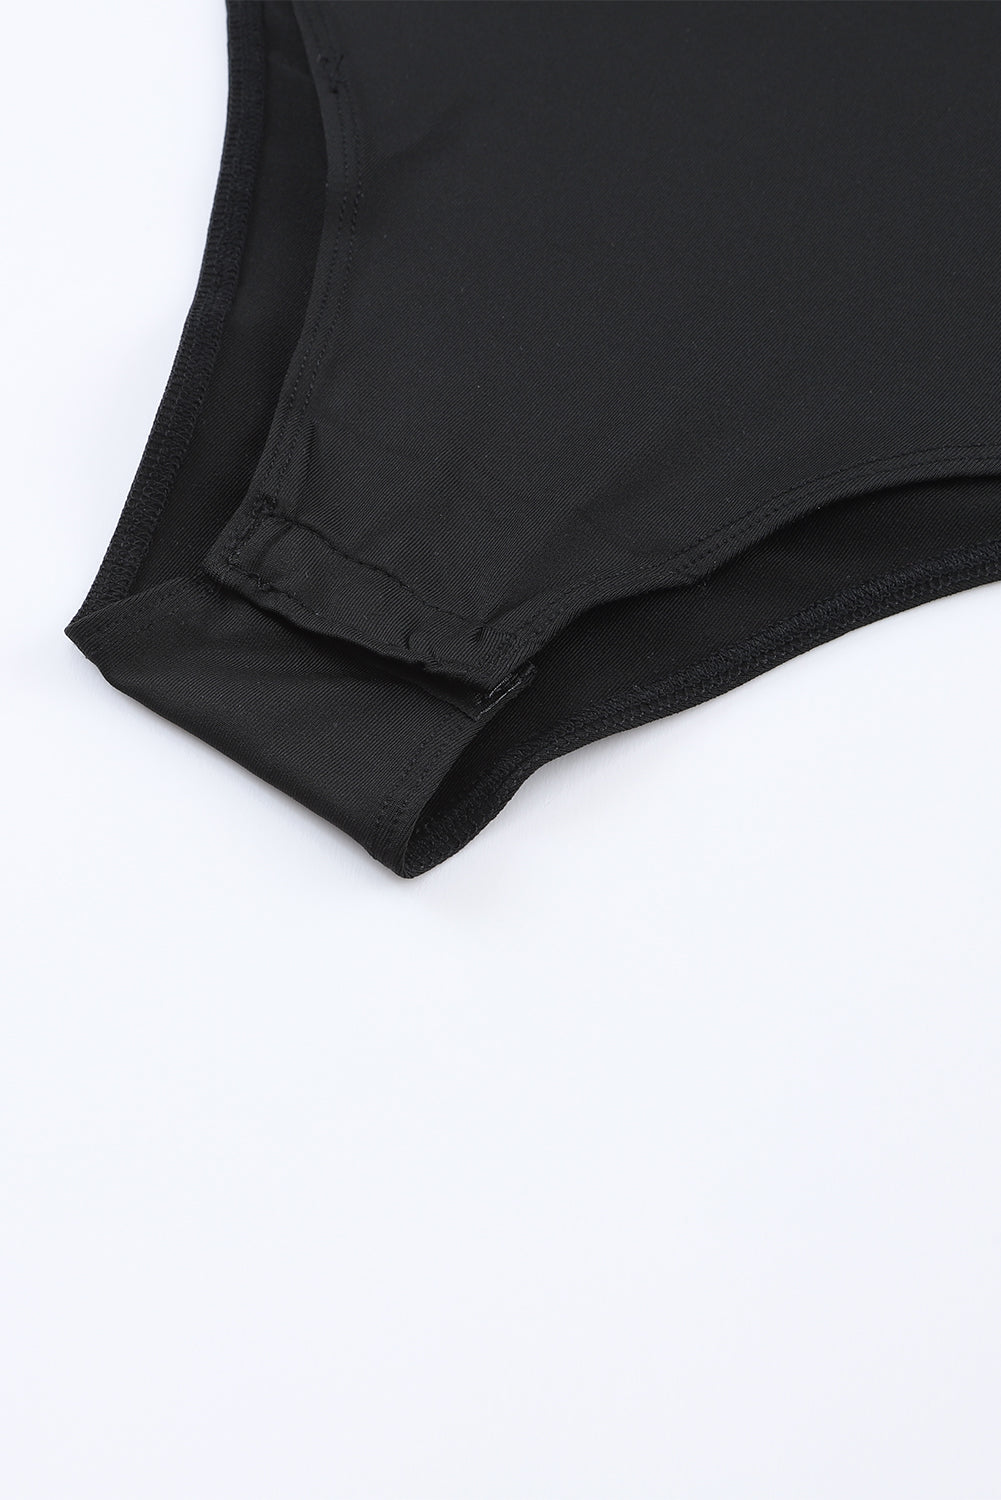 Black Rhinestone Fringed Cold Shoulder Long Sleeve Bodysuit